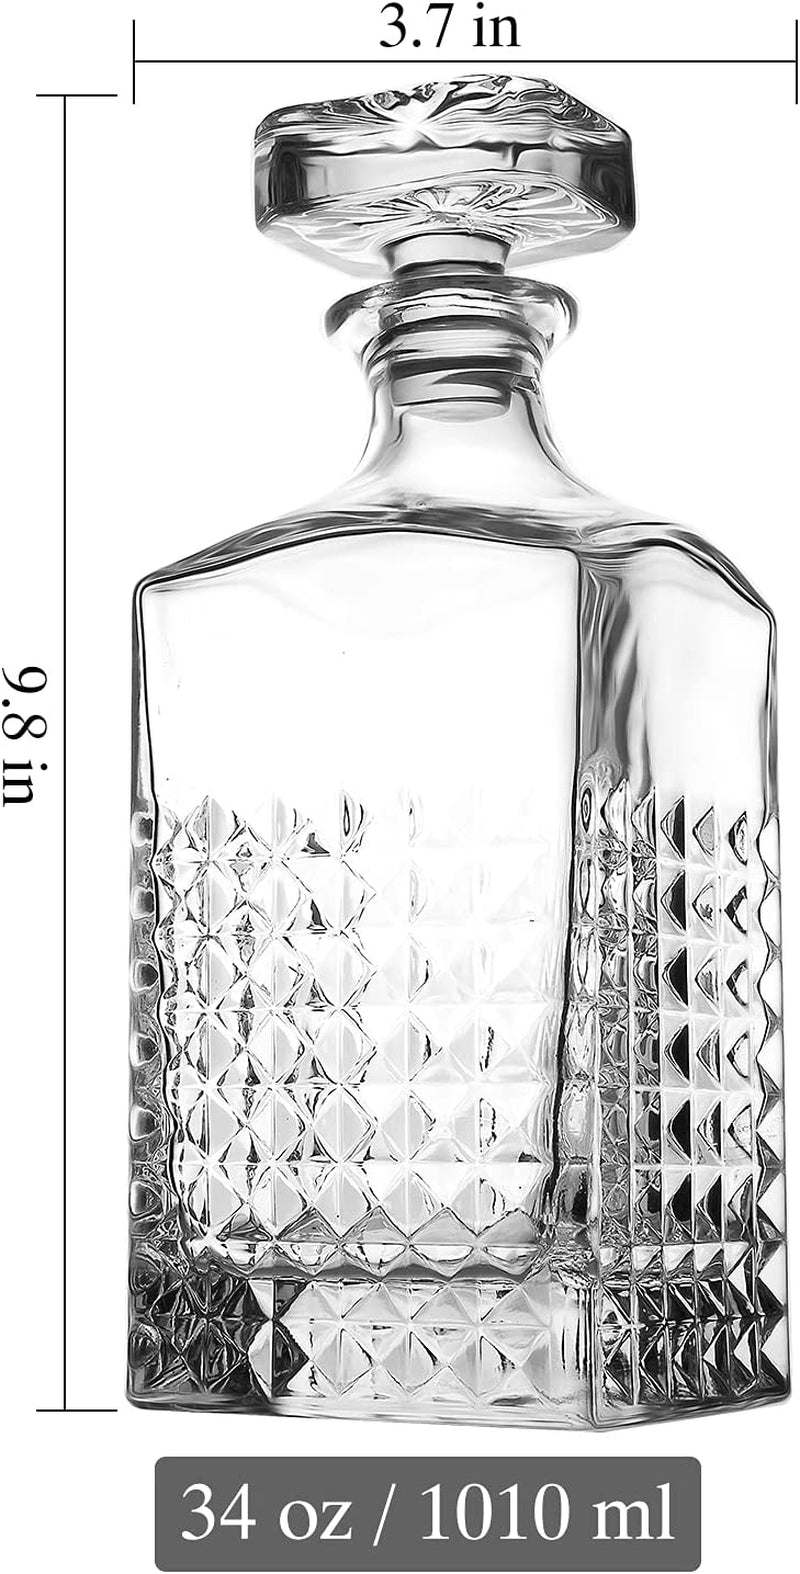 Lighten Life Whiskey Decanter,34 Oz Liquor Decanter with Glass Stopper in Gift Box,Premium Bourbon Decanter,Crystal Scotch Decanter for Whiskey,Bourbon,Scotch Home & Garden > Kitchen & Dining > Barware LIGHTEN LIFE   